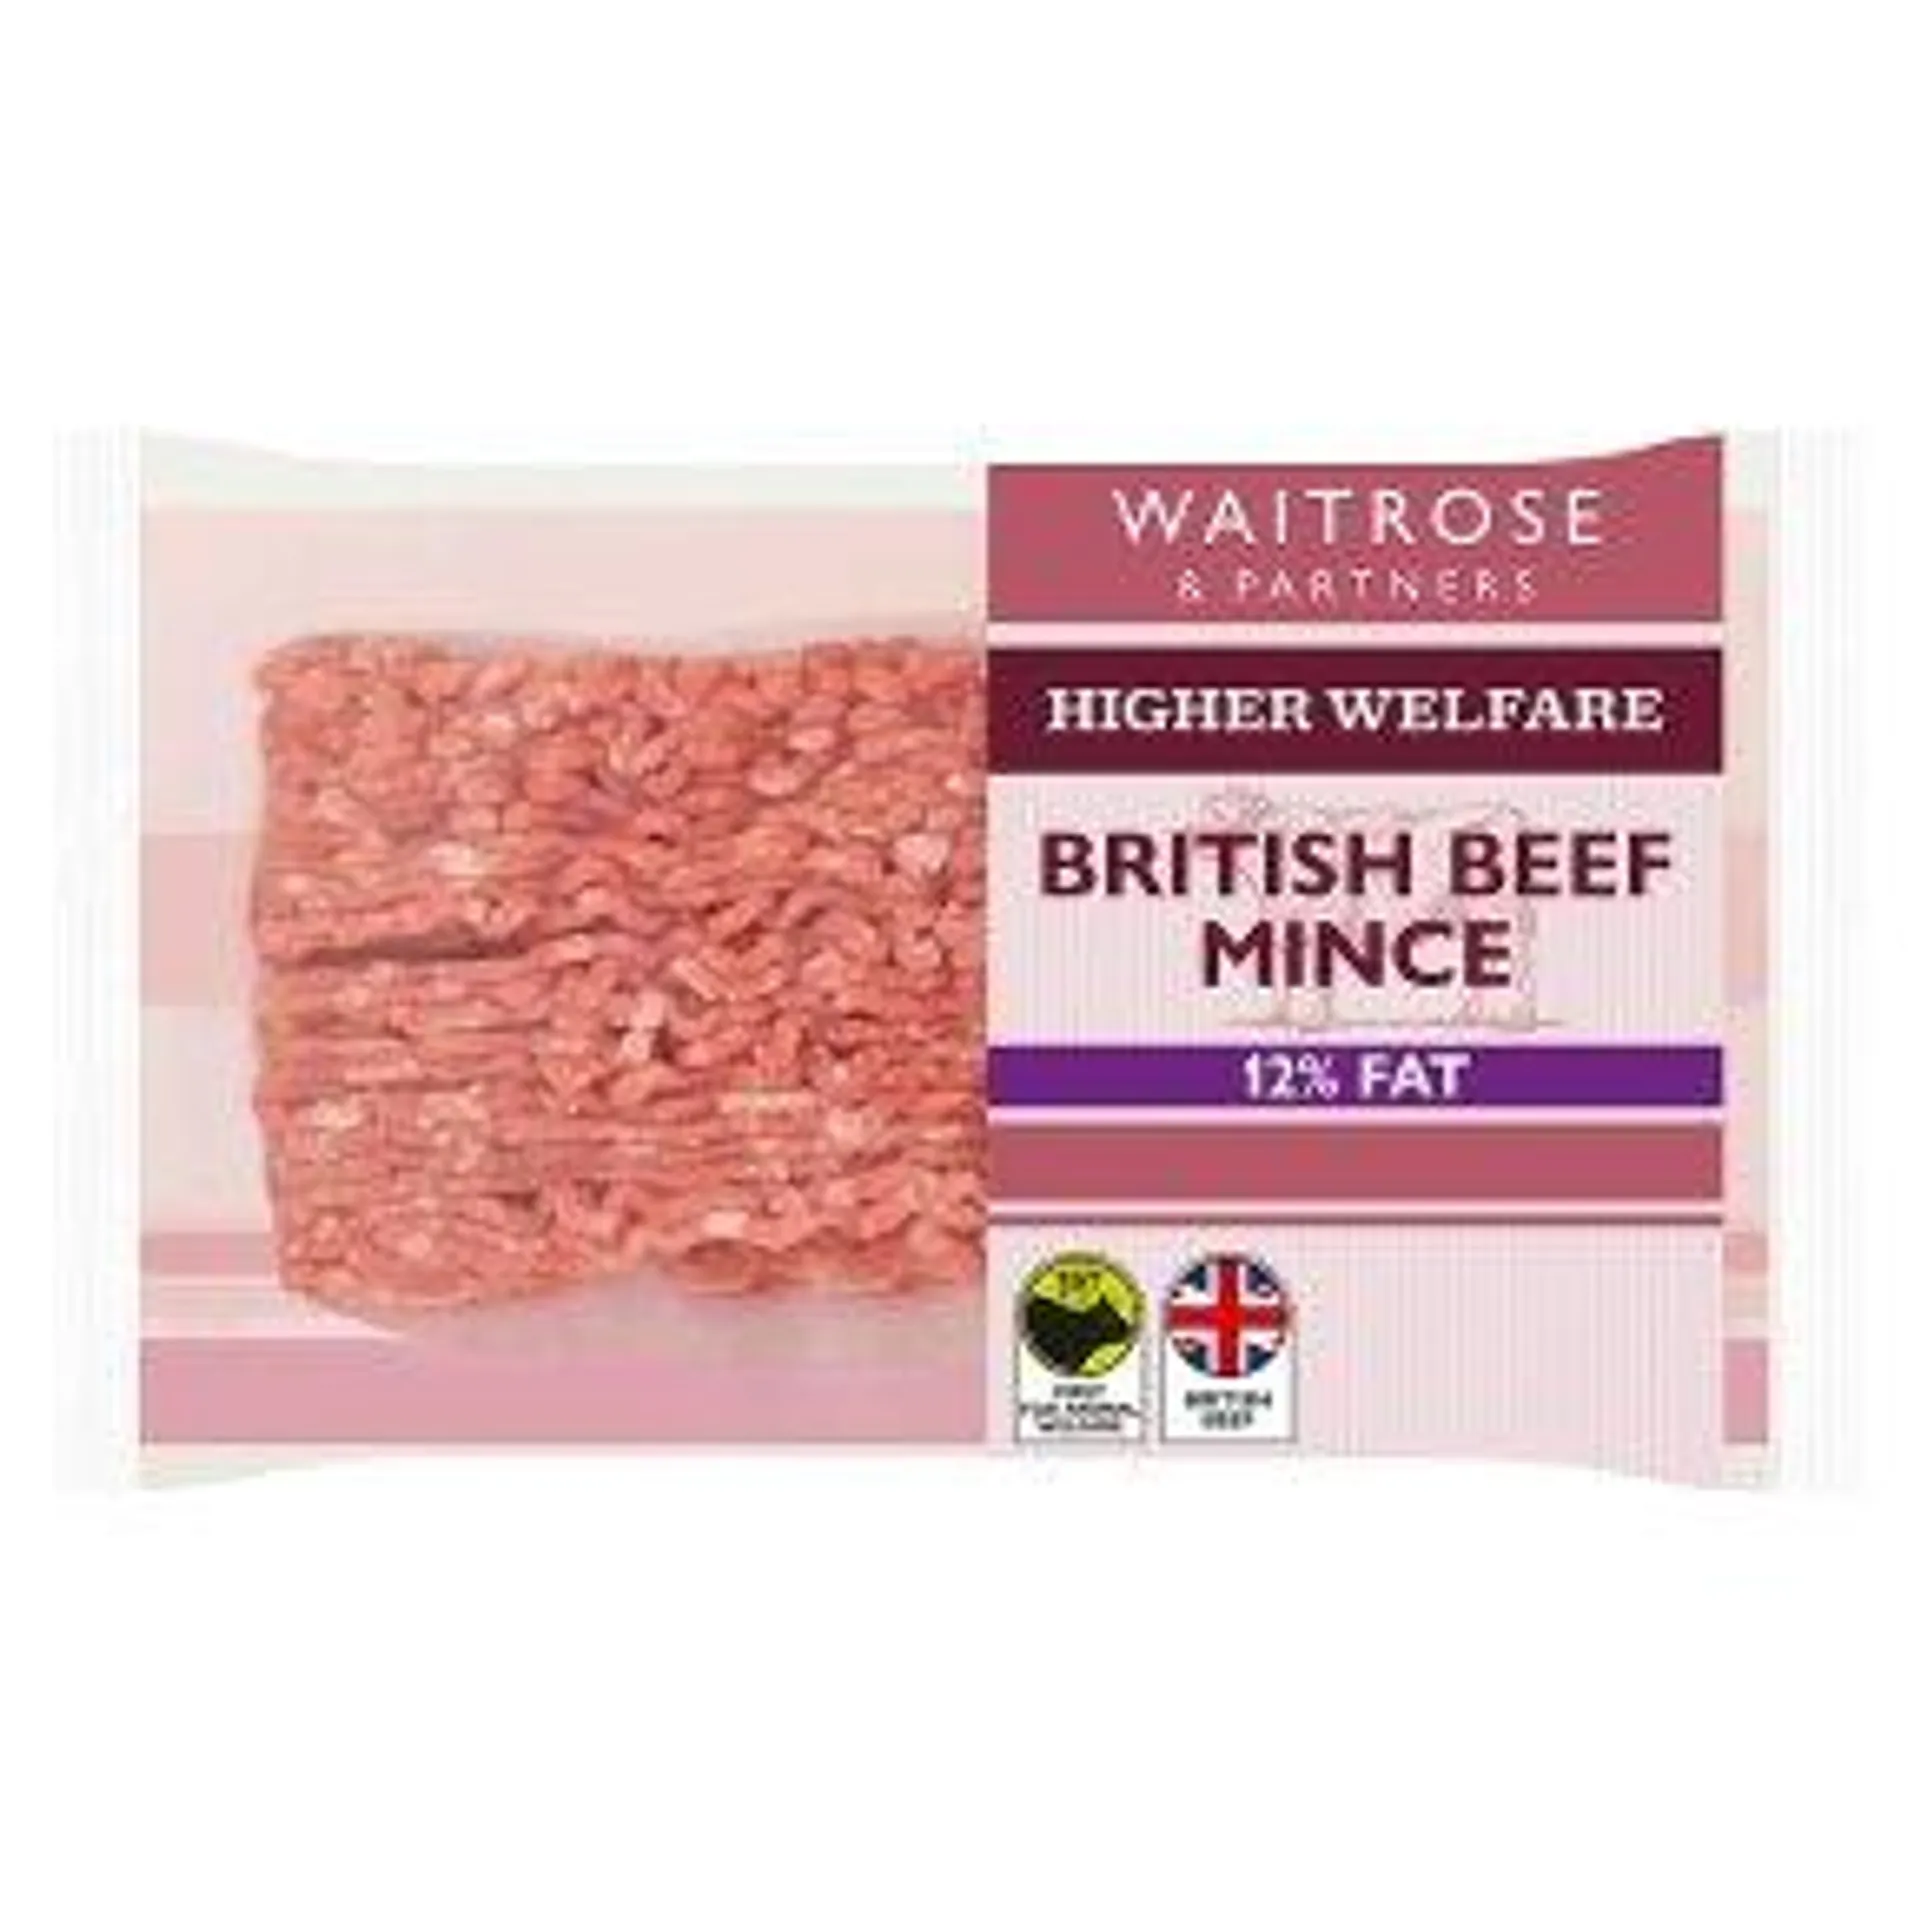 Waitrose British Native Breed Beef Mince 12% Fat